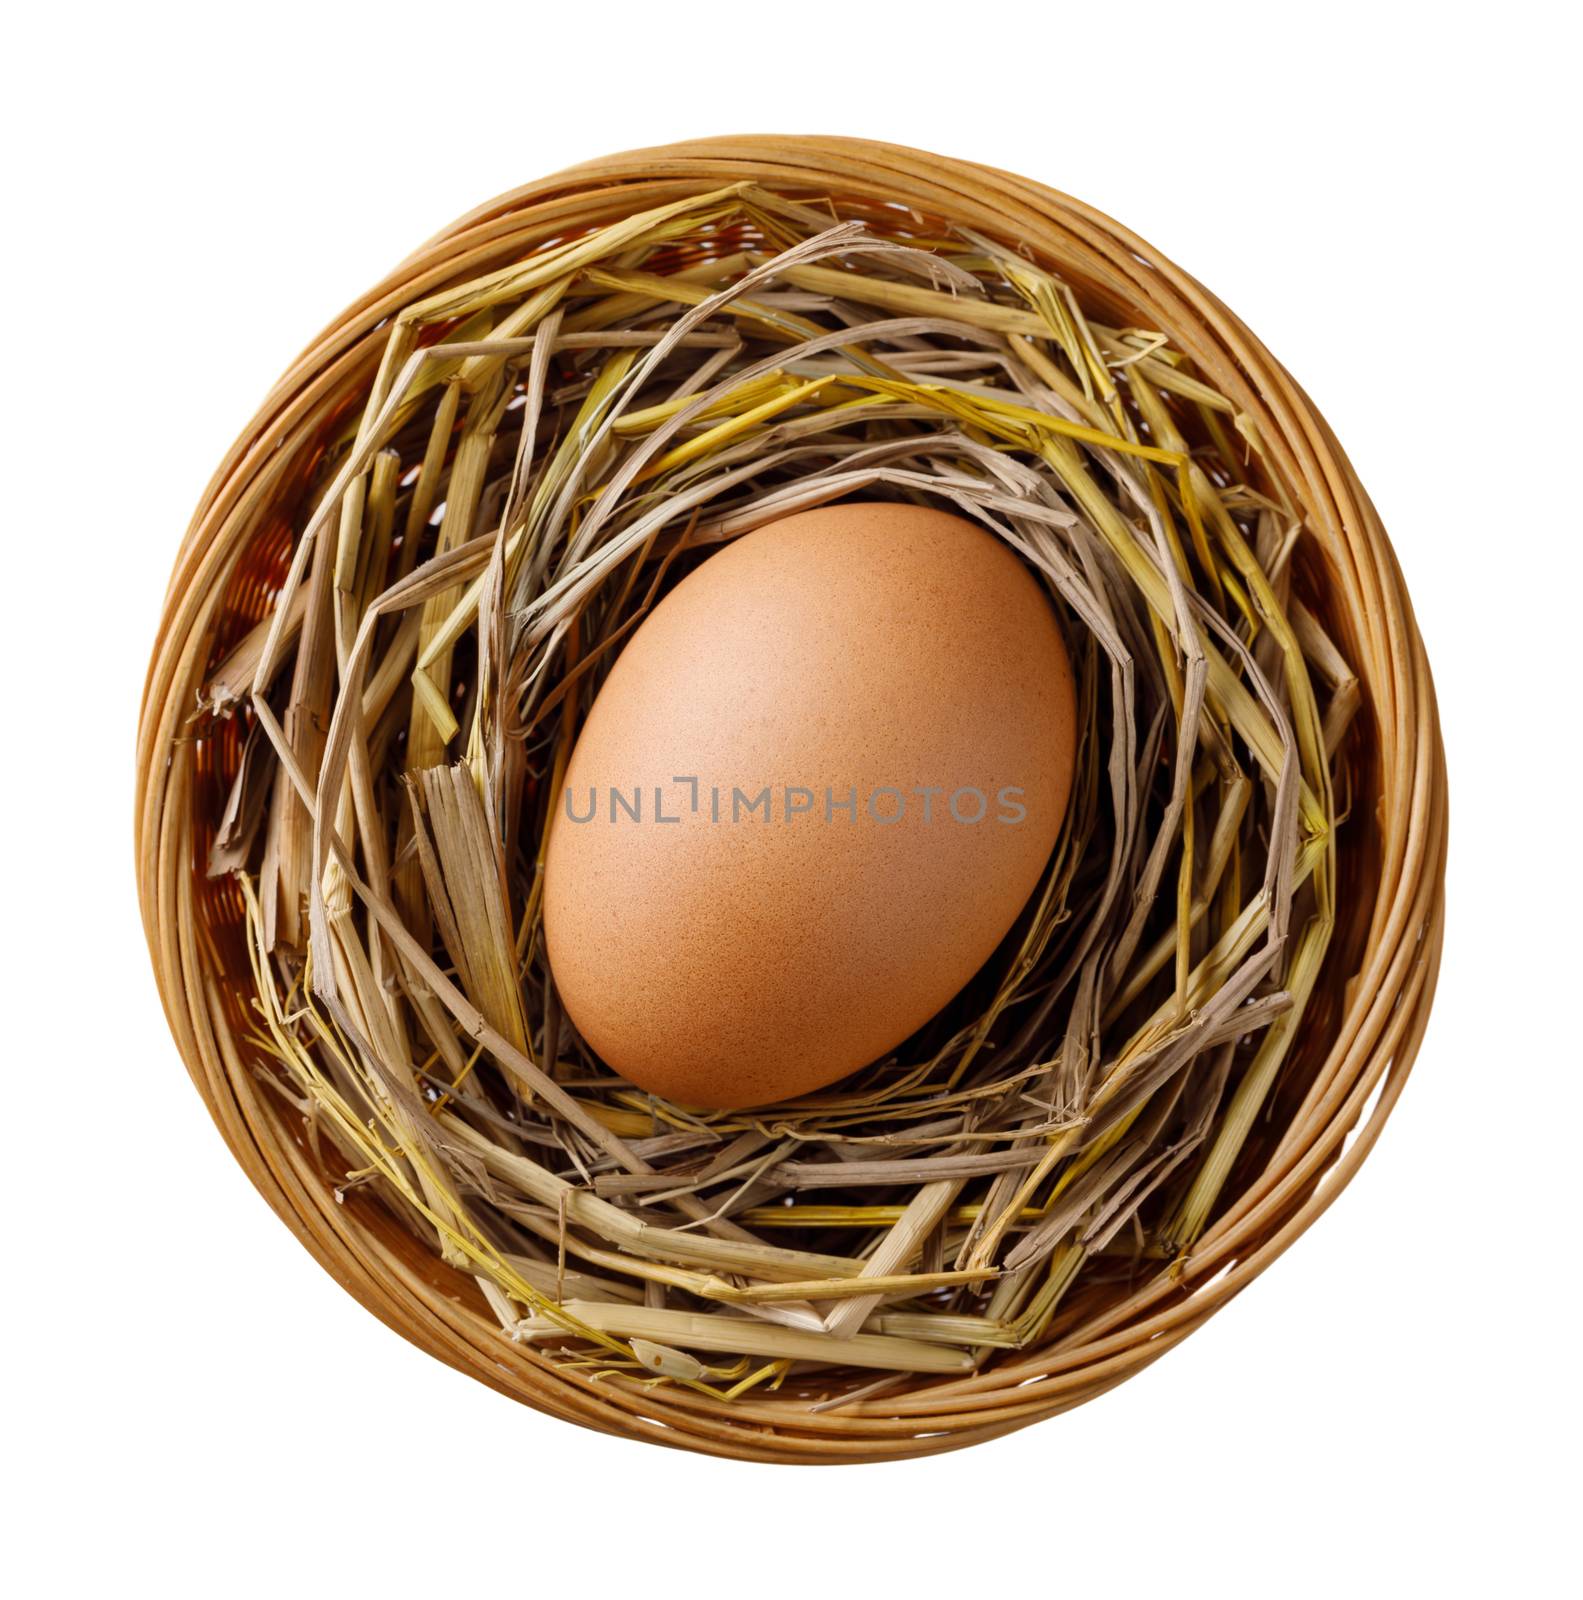 Chicken or hen egg on straw in wicker basket by smuay